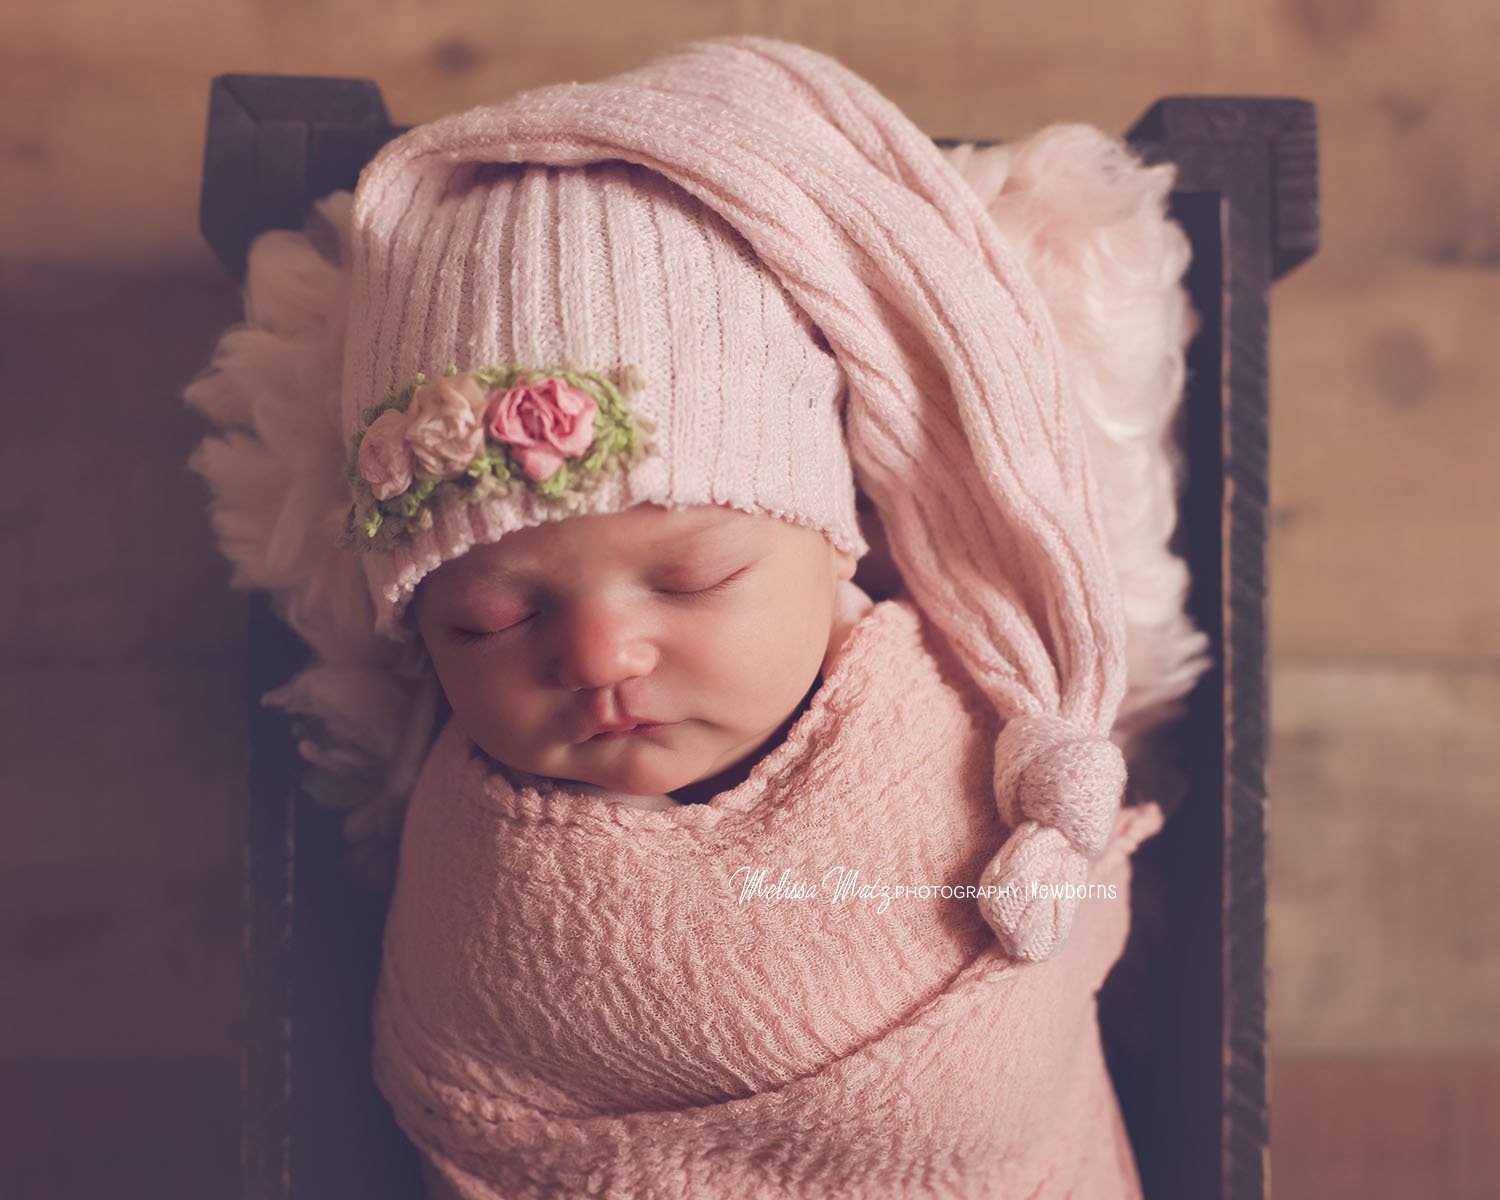 newborn-photography-baby-girl-pink-sleeping-hat-shelby-township-mi